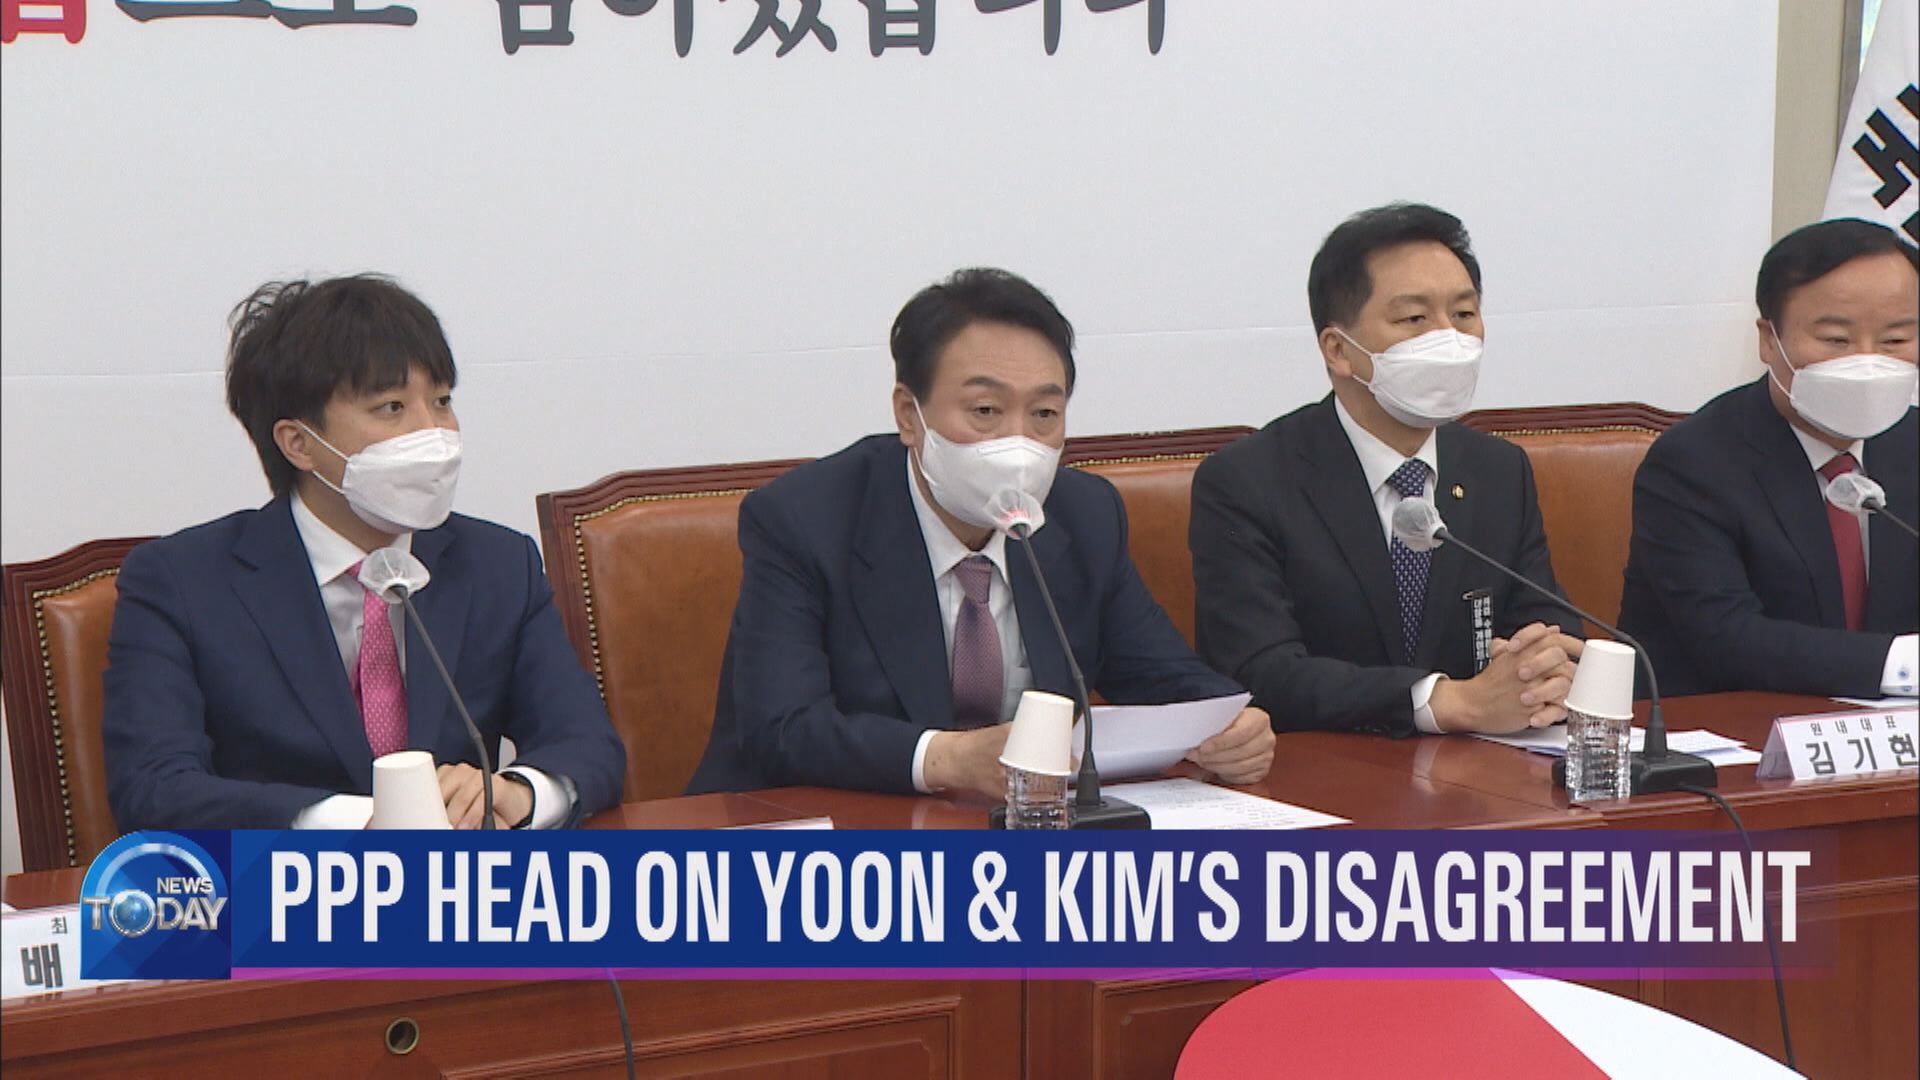 PPP HEAD ON YOON & KIM’S DISAGREEMENT